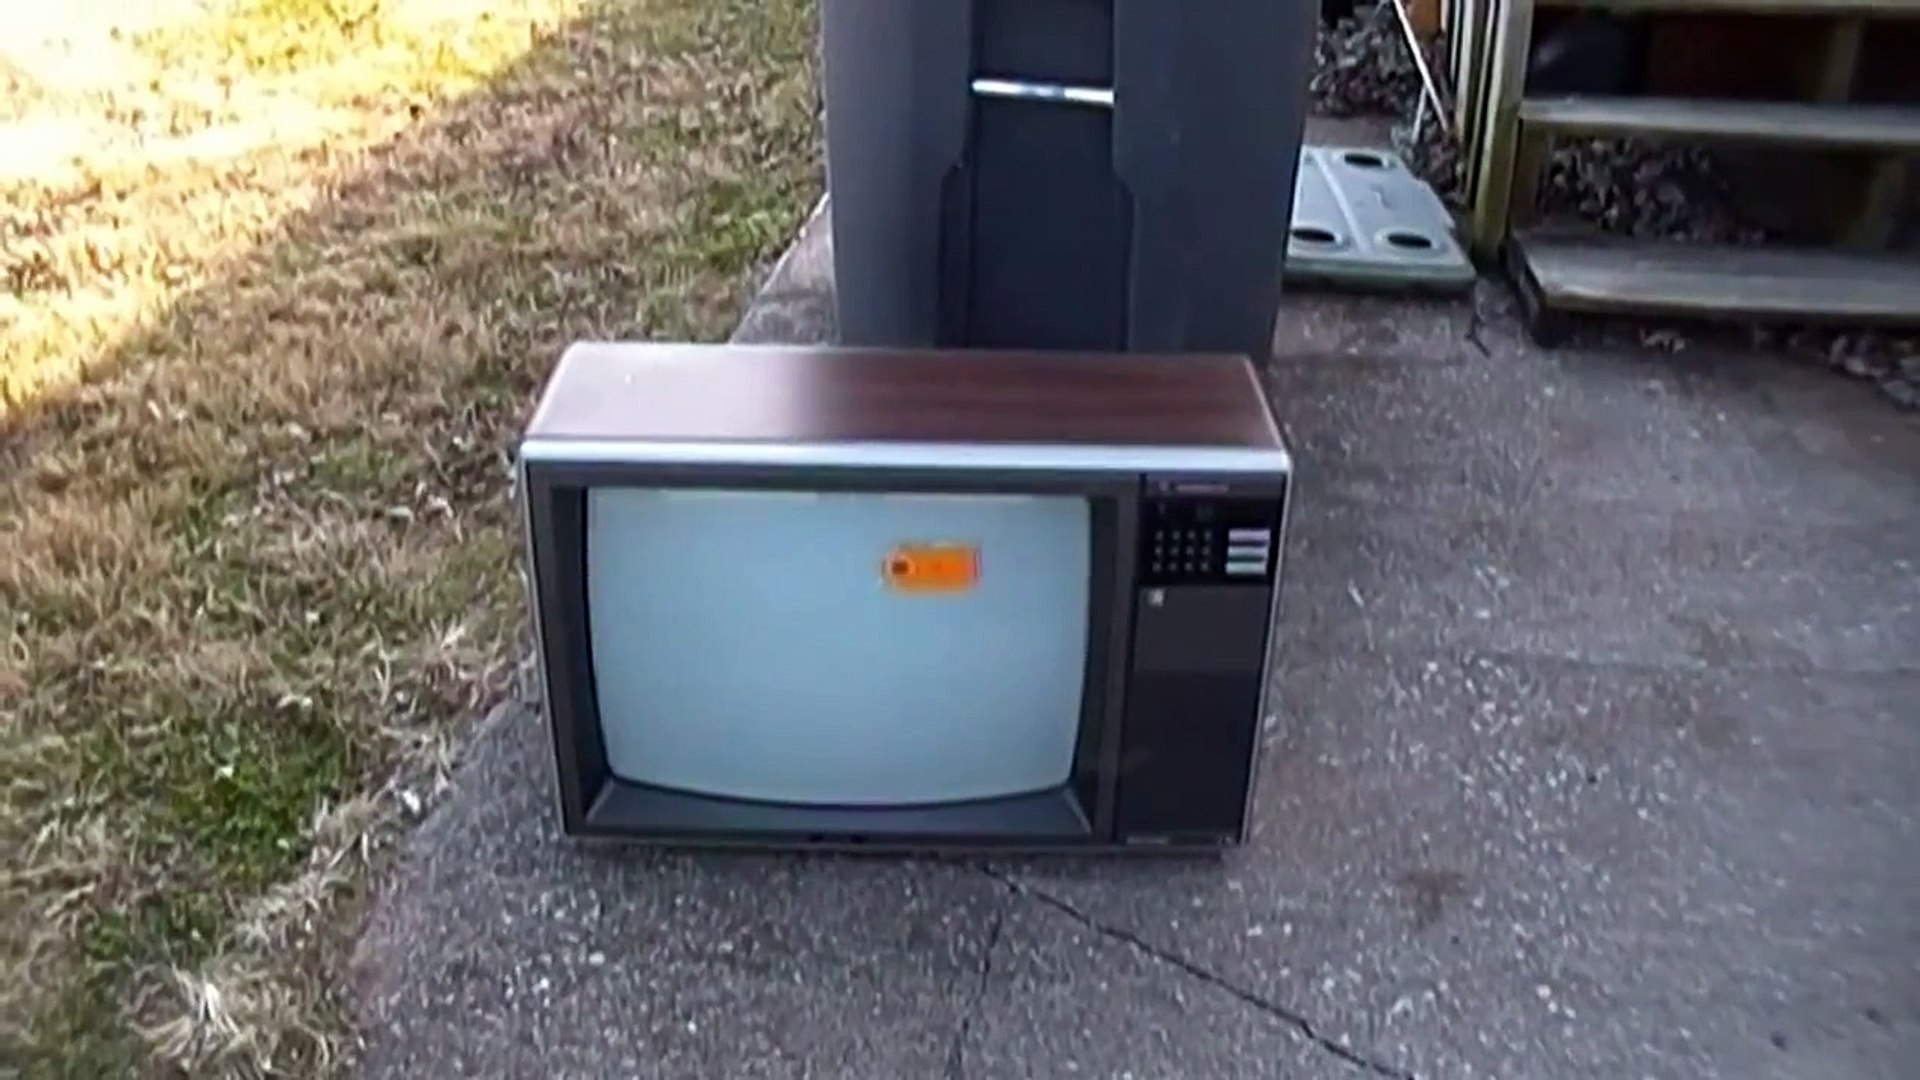 ⁣The 1986 JCPenney TV Model 685-2117